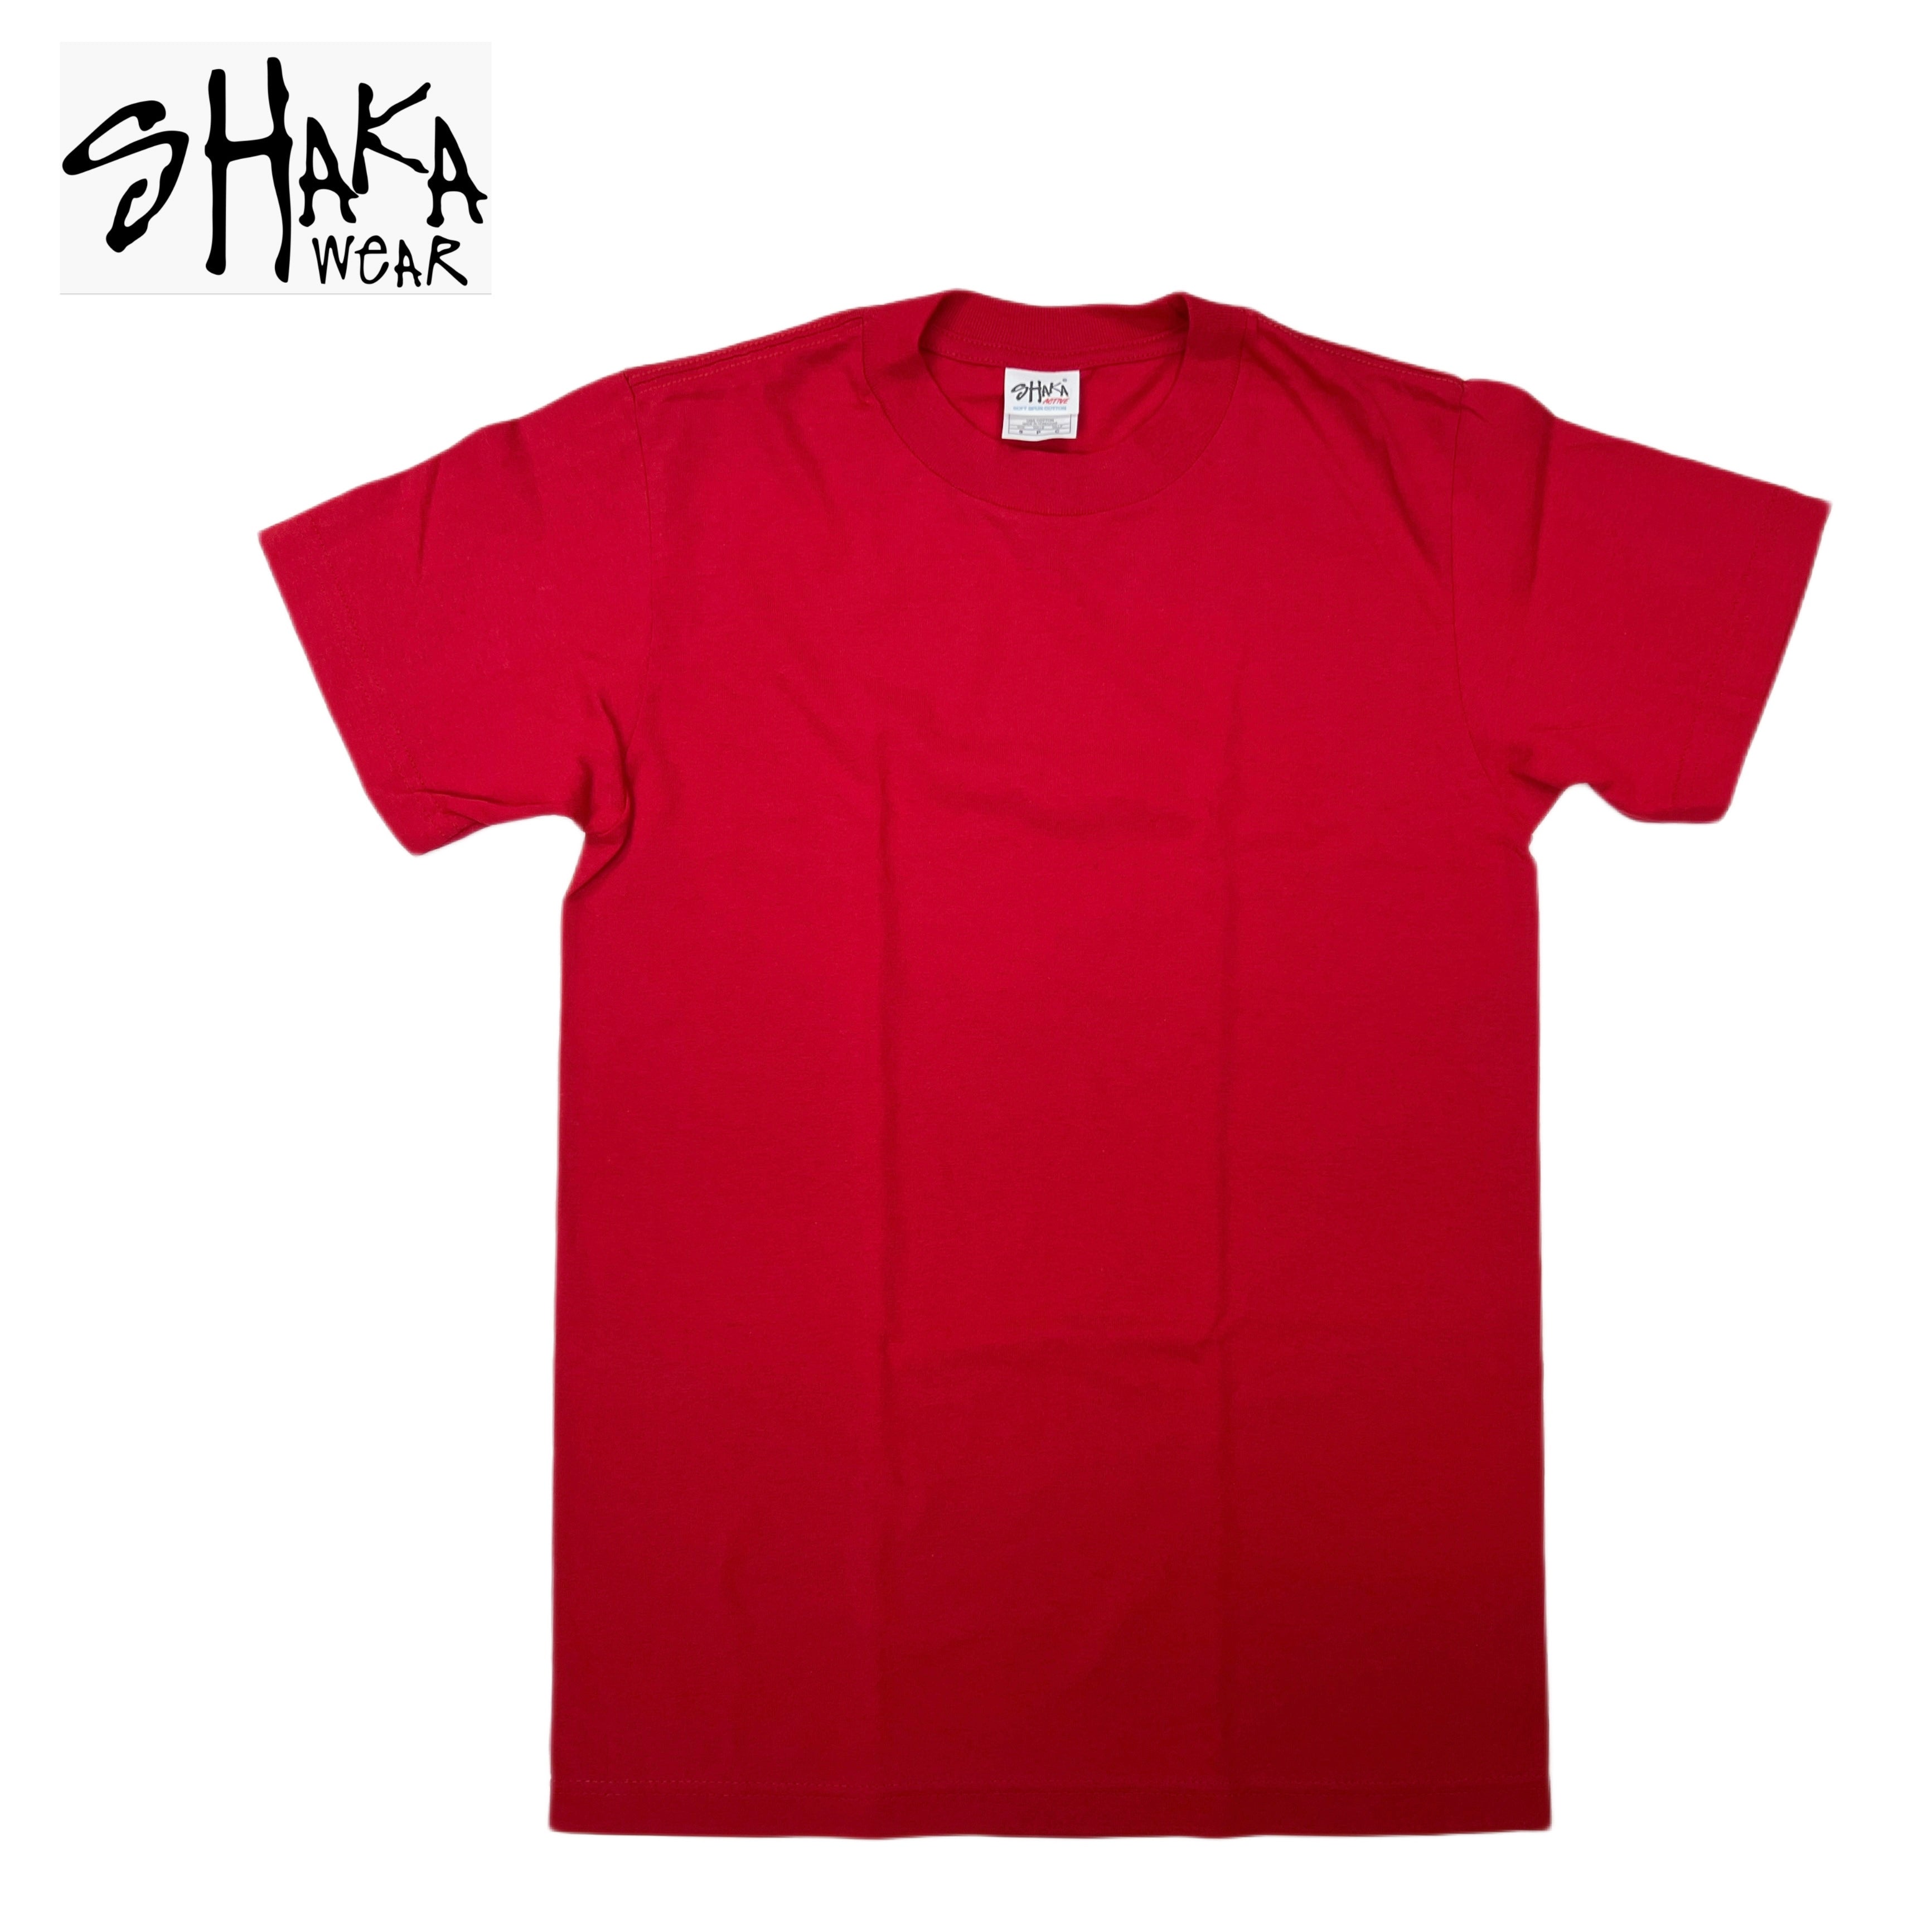 Shaka Wear 6.0 oz Active Short Sleeve T-Shirt (Hunter Green/Kelly Green/Orange/Hot Pink/Pink) Kelly Green / x Large